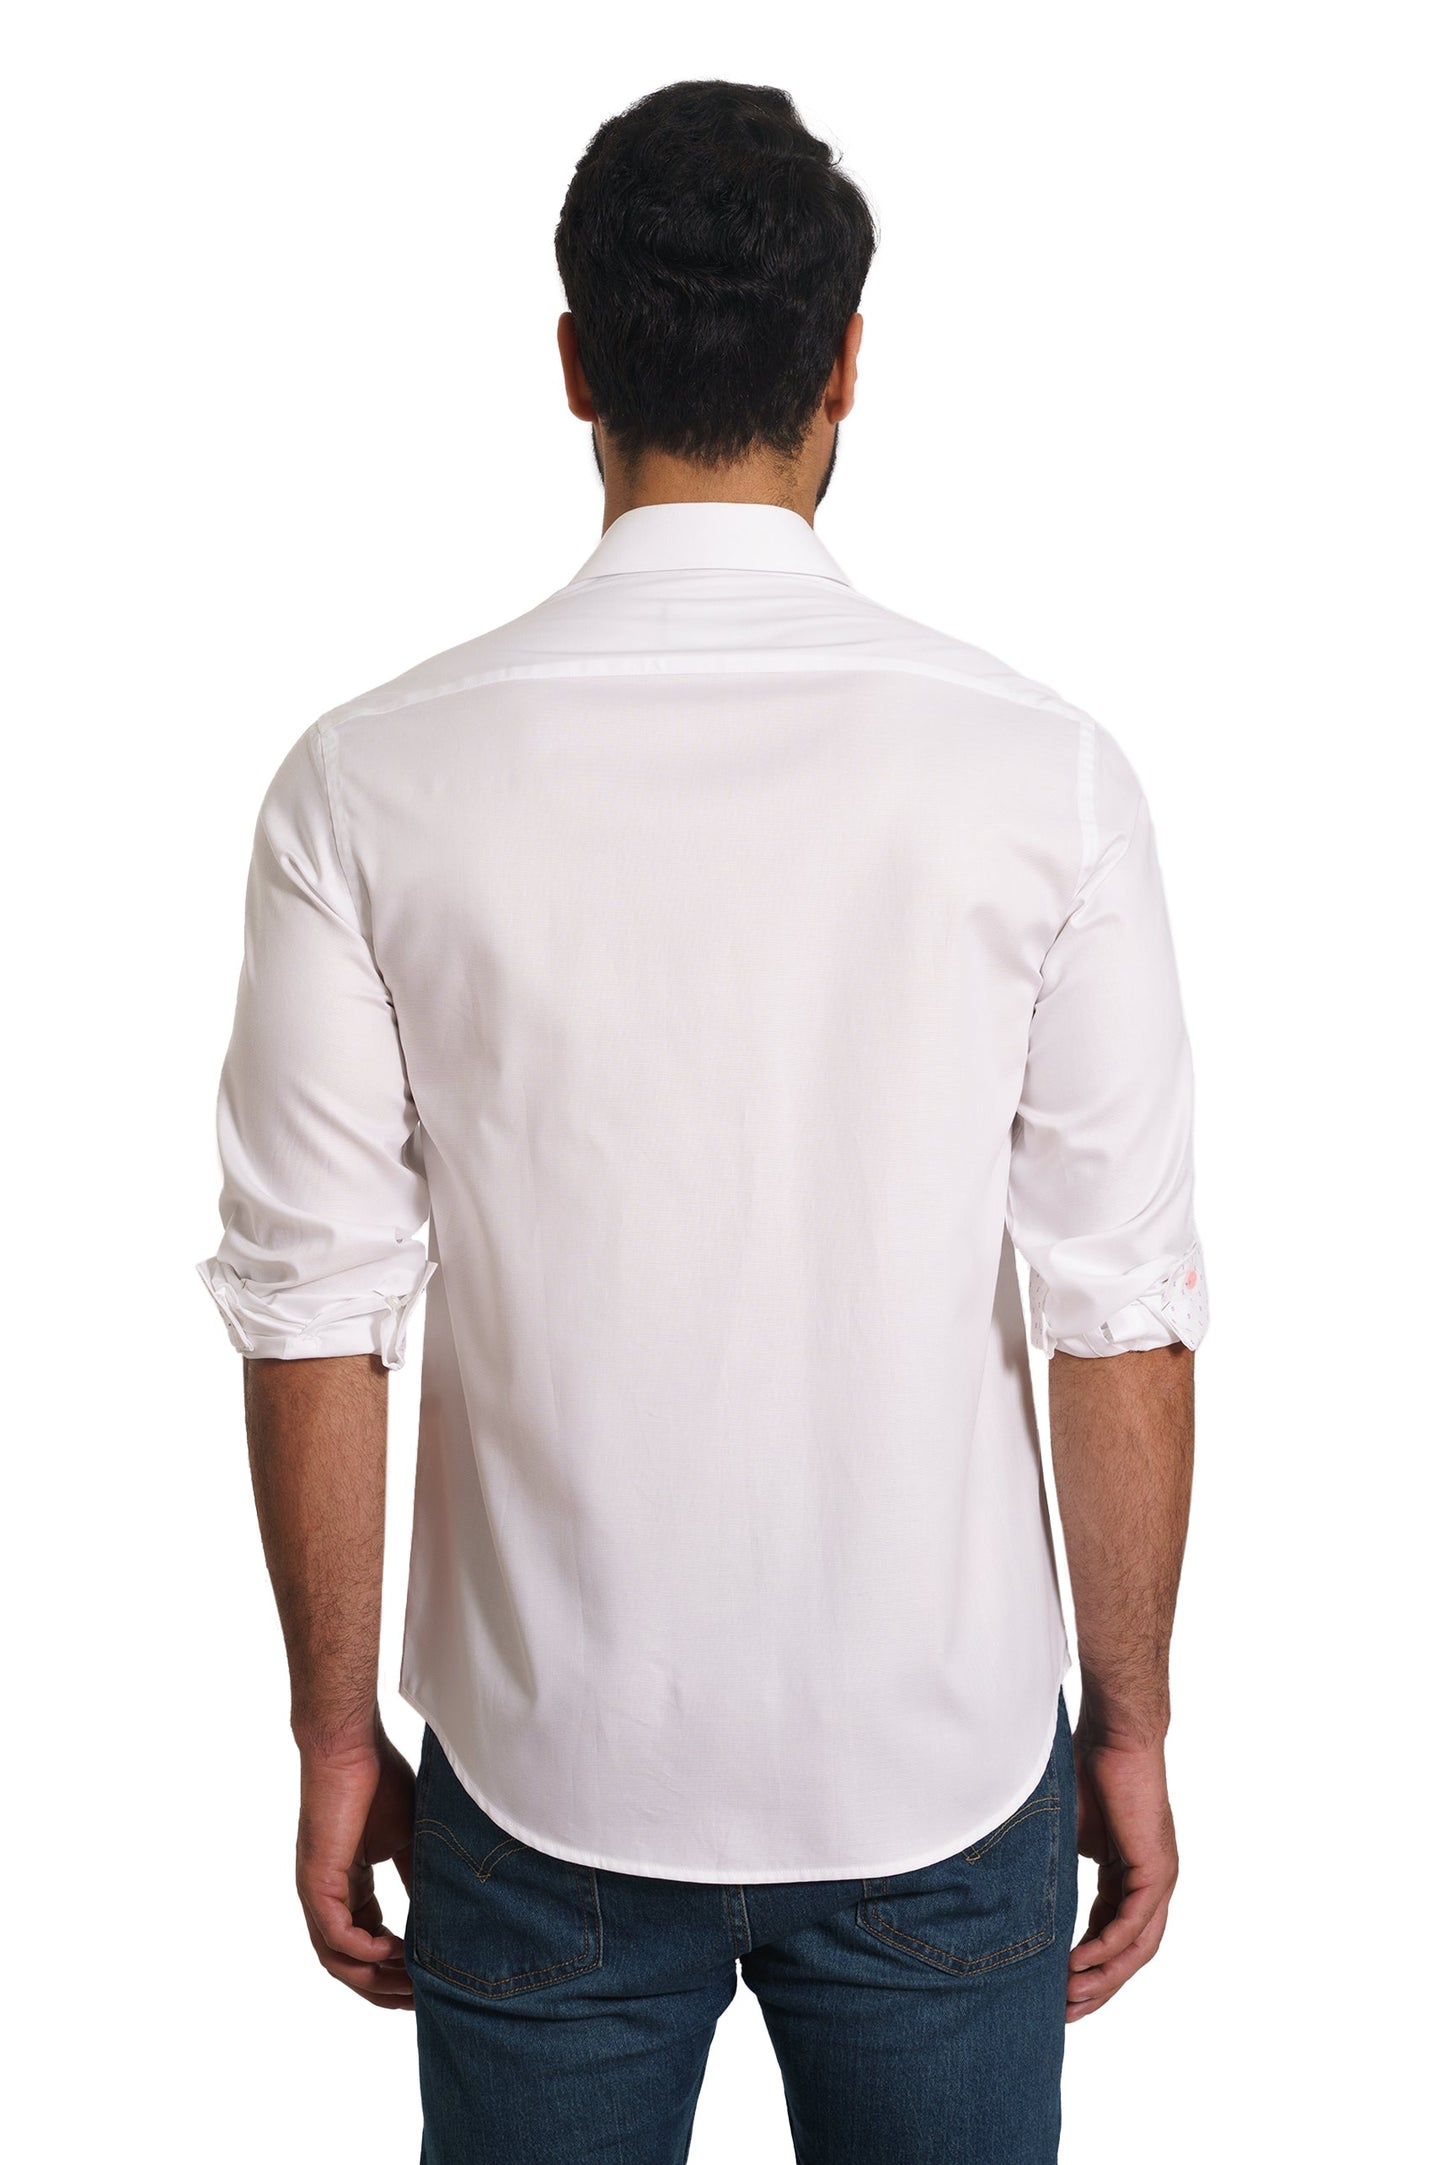 White Long Sleeve Shirt TP-7156 Back